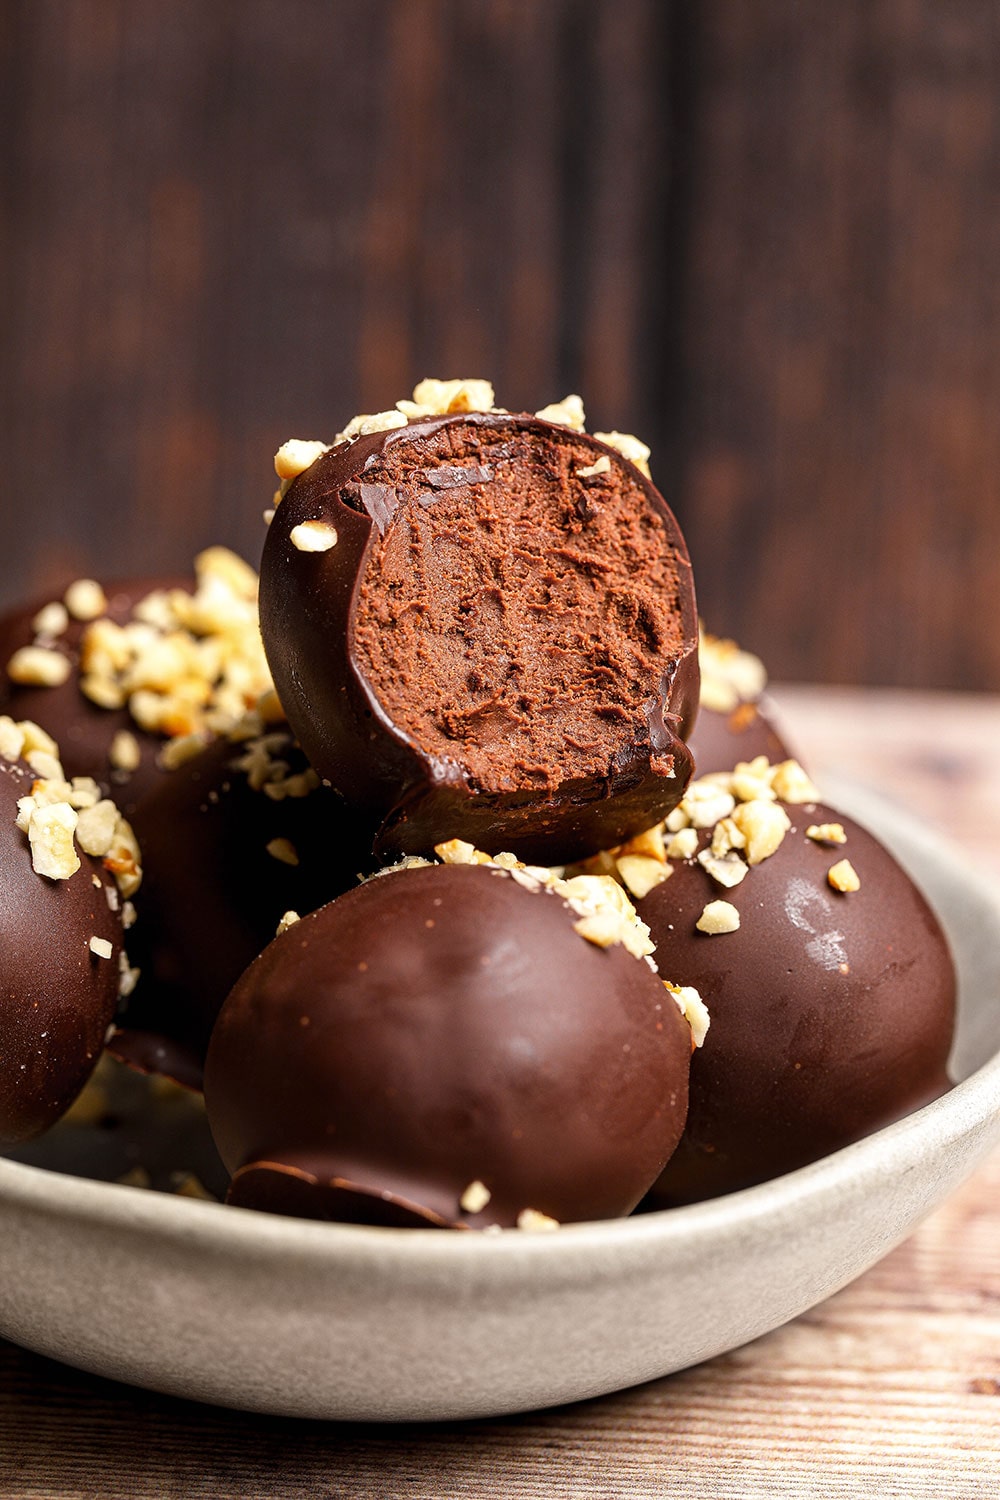 4-Ingredient Vegan Hazelnut Chocolate Truffles